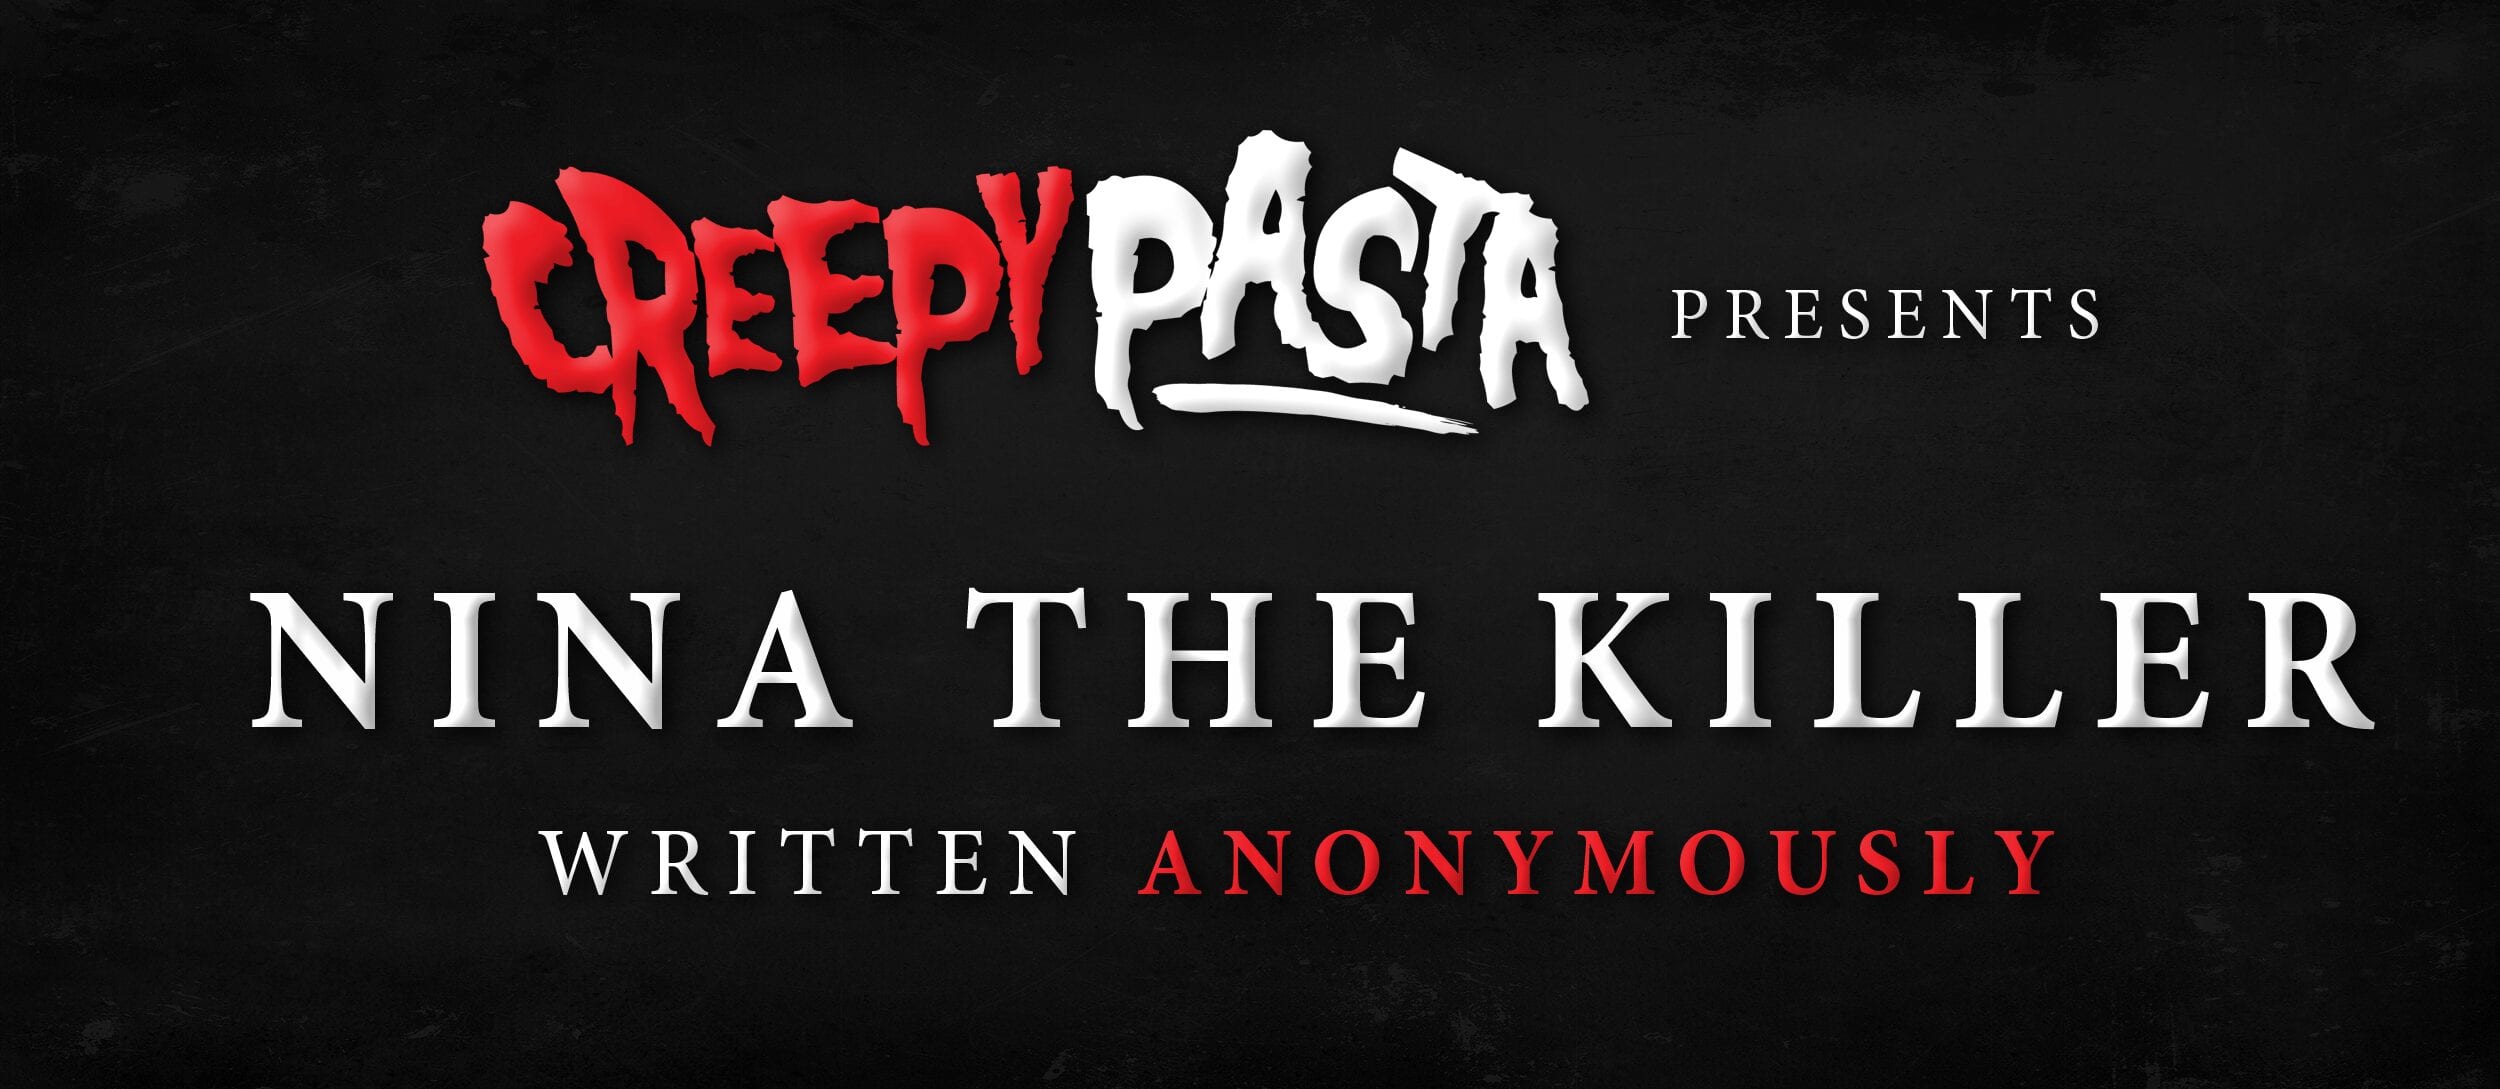 Jeff the Killer Archives - Creepypasta